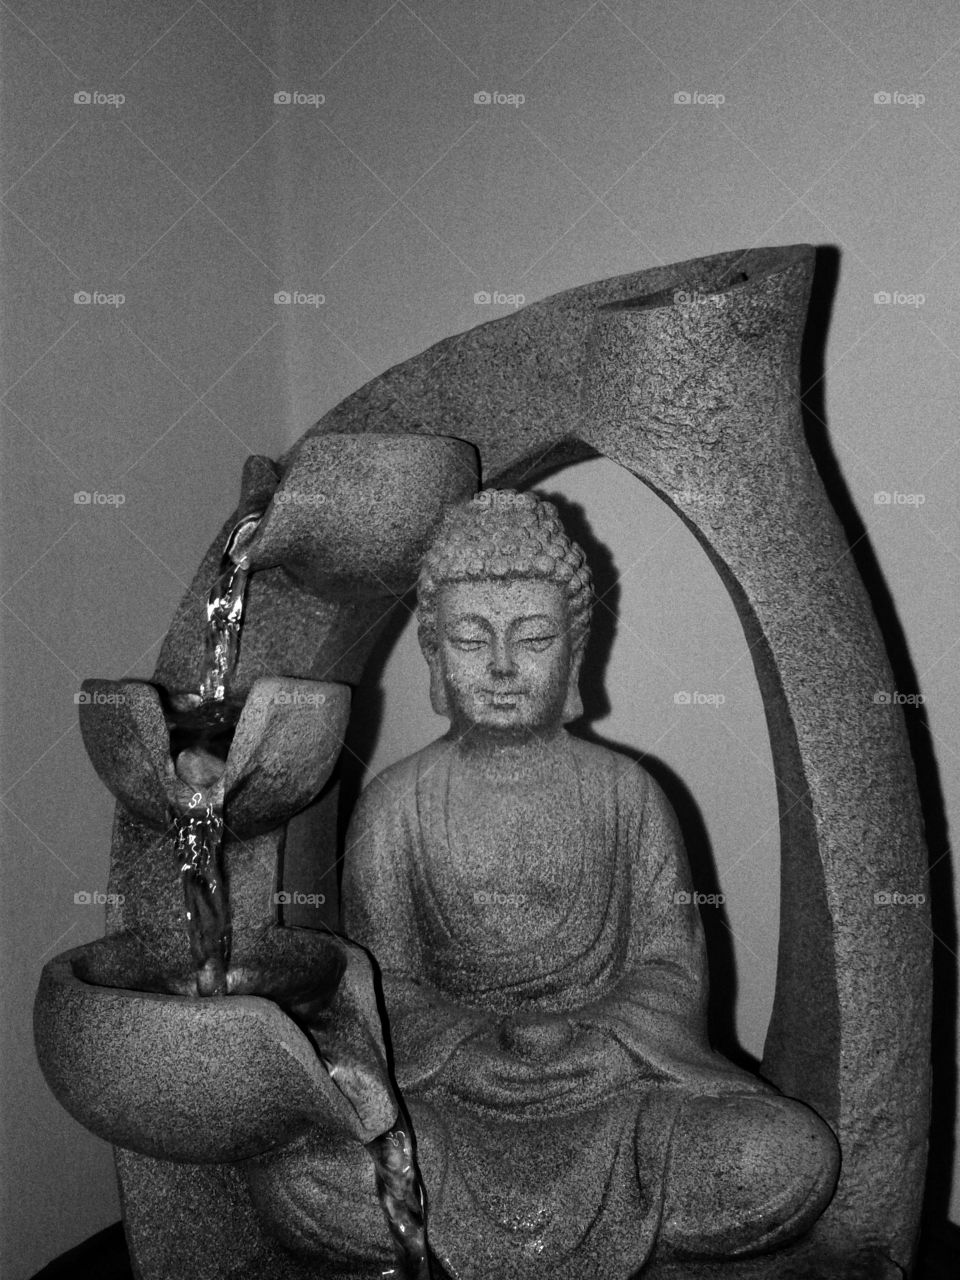 Lord buddha's statue